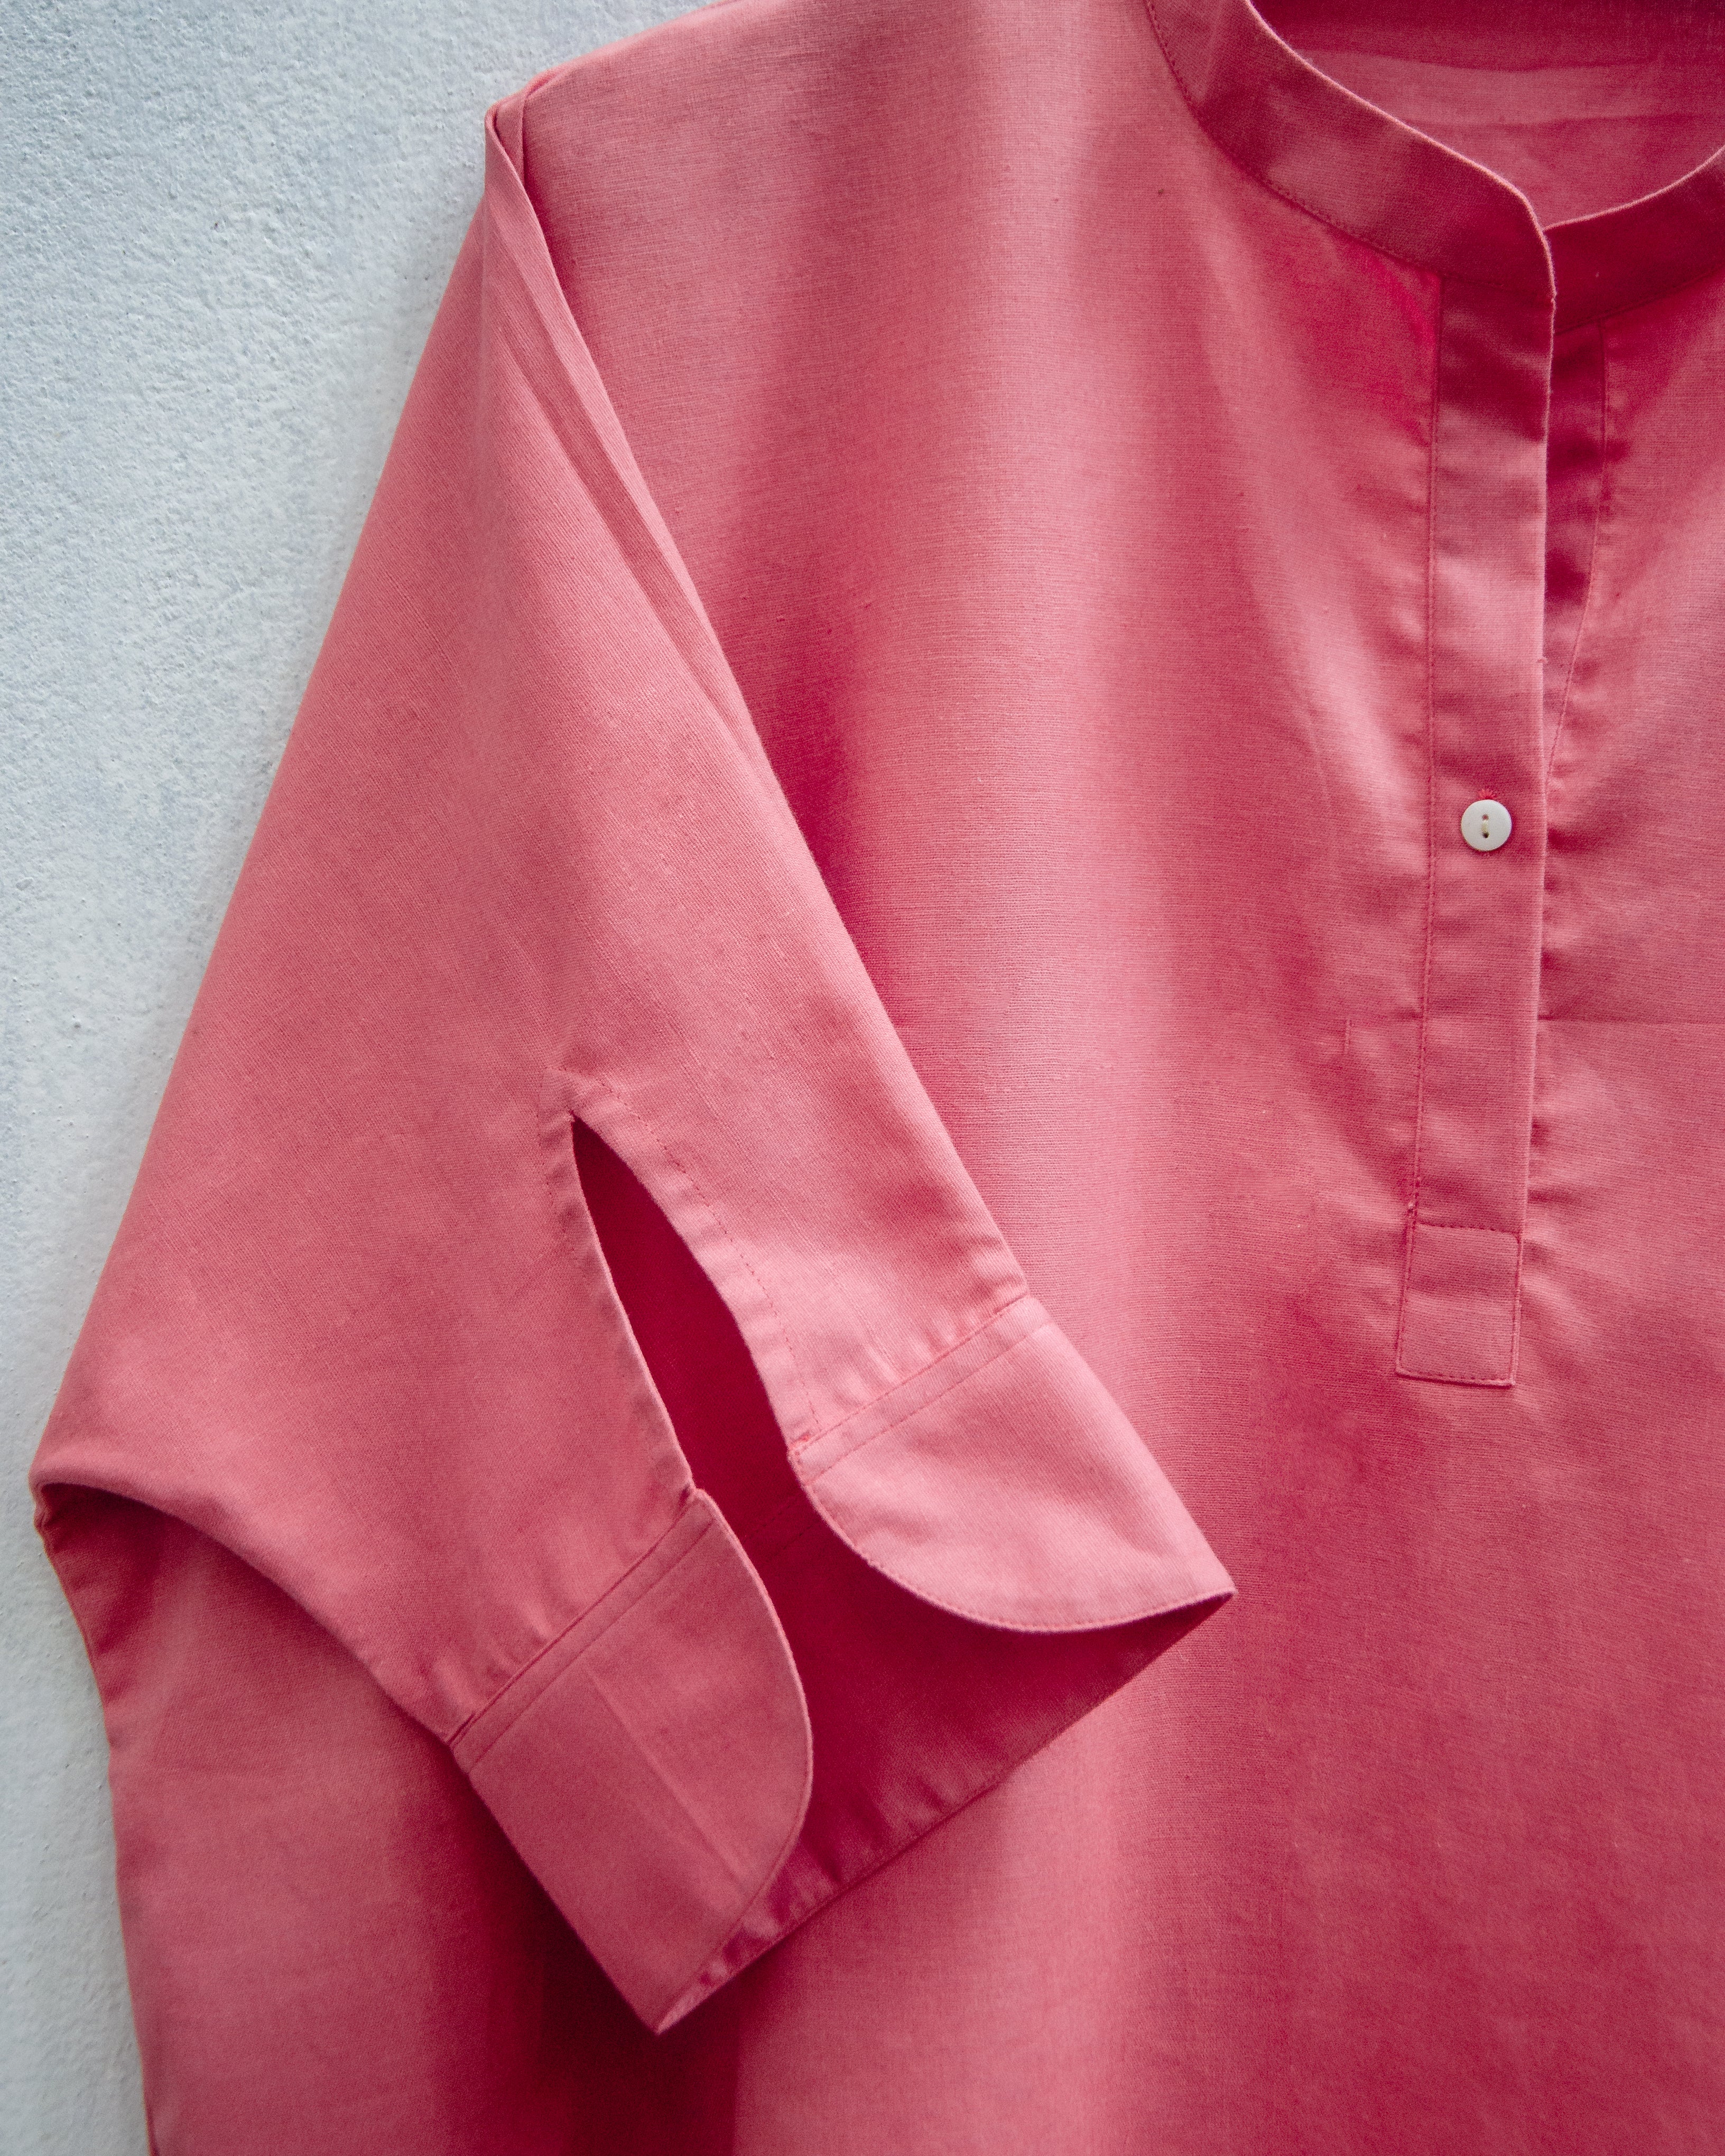 Salmon Pink Dress/Top